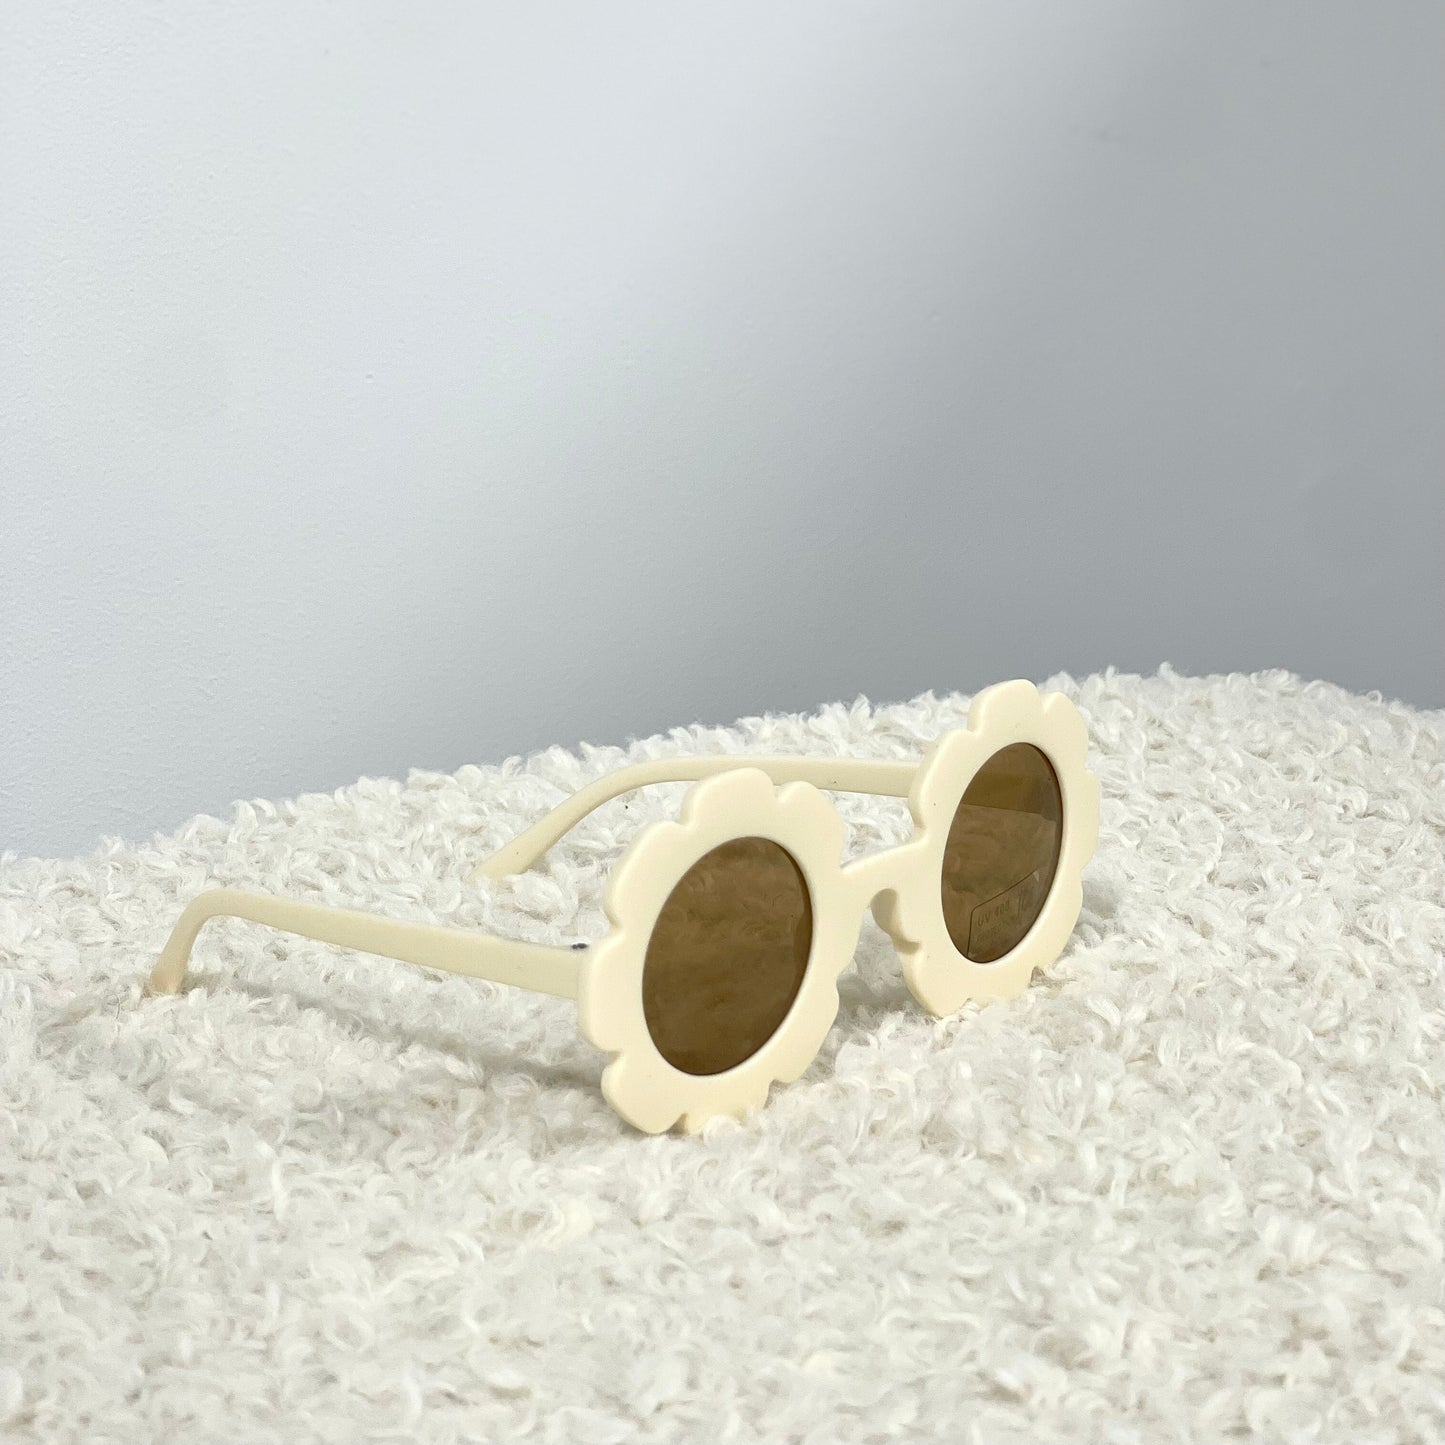 shades | flower-sunglasses-fini. the label